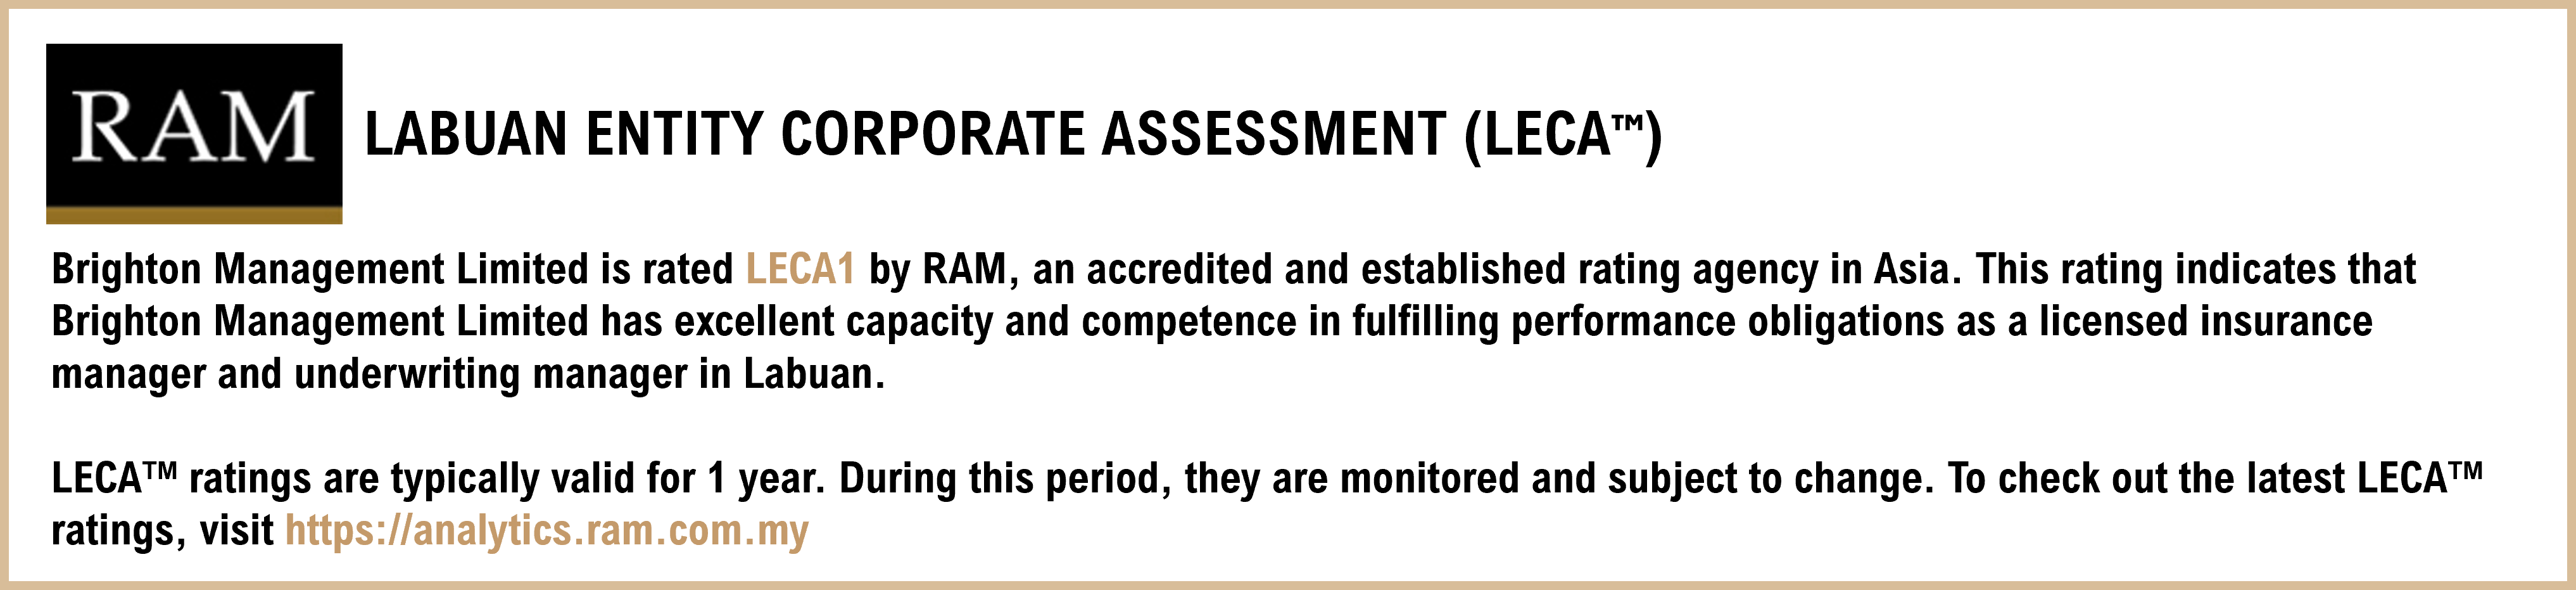 LECA Rating of Brighton Management Limited